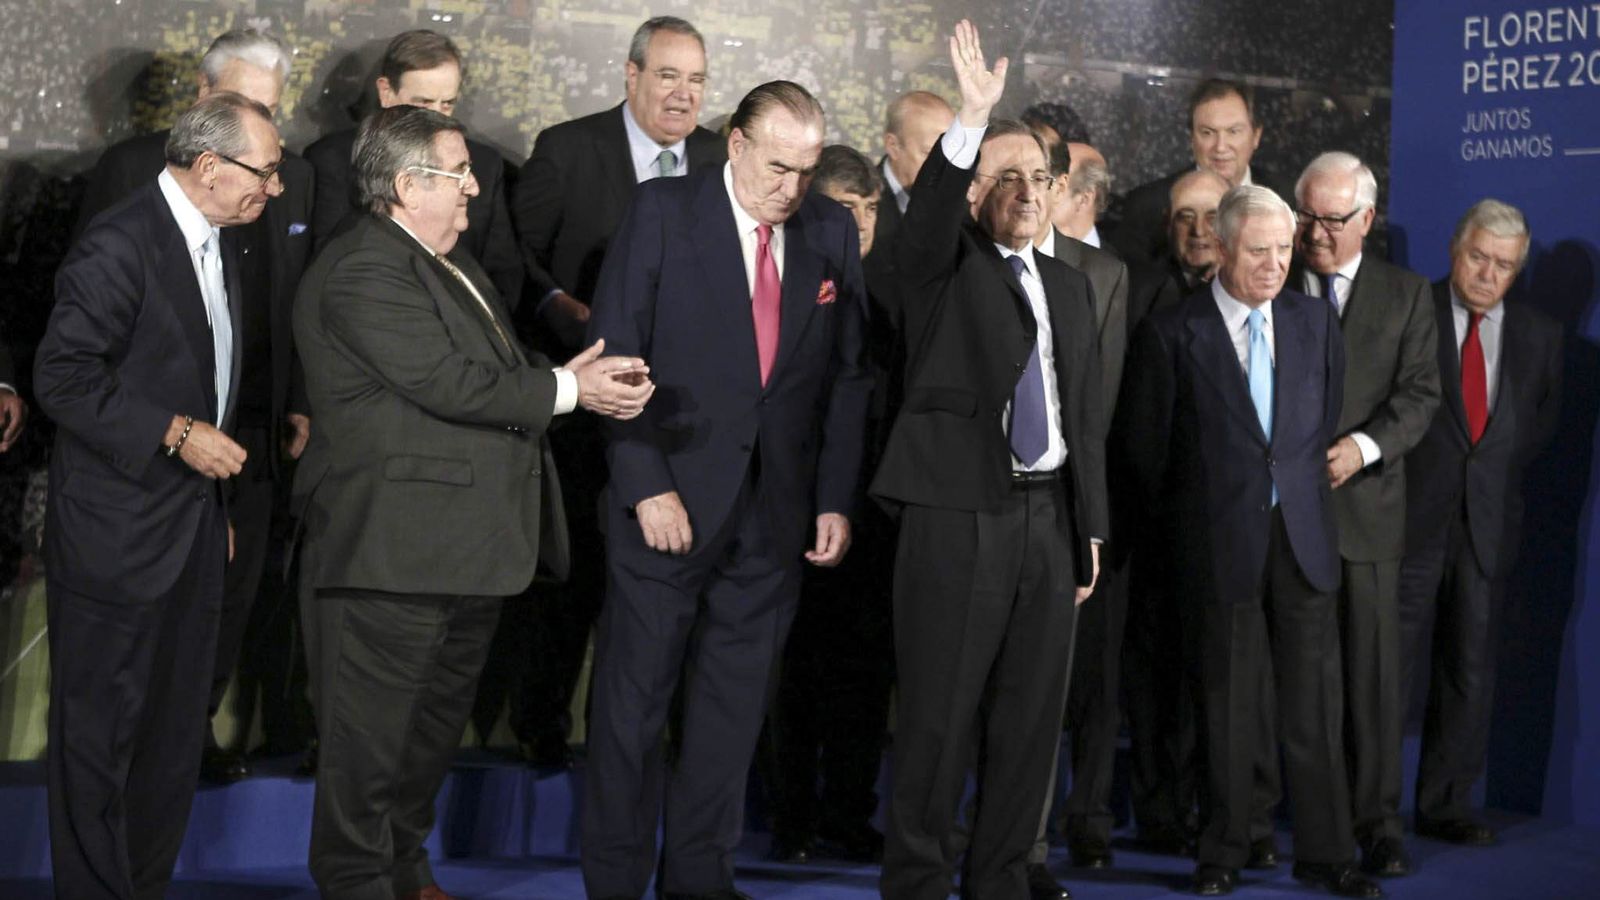 Foto: Florentino Pérez, rodeado de su Junta directiva (Efe)